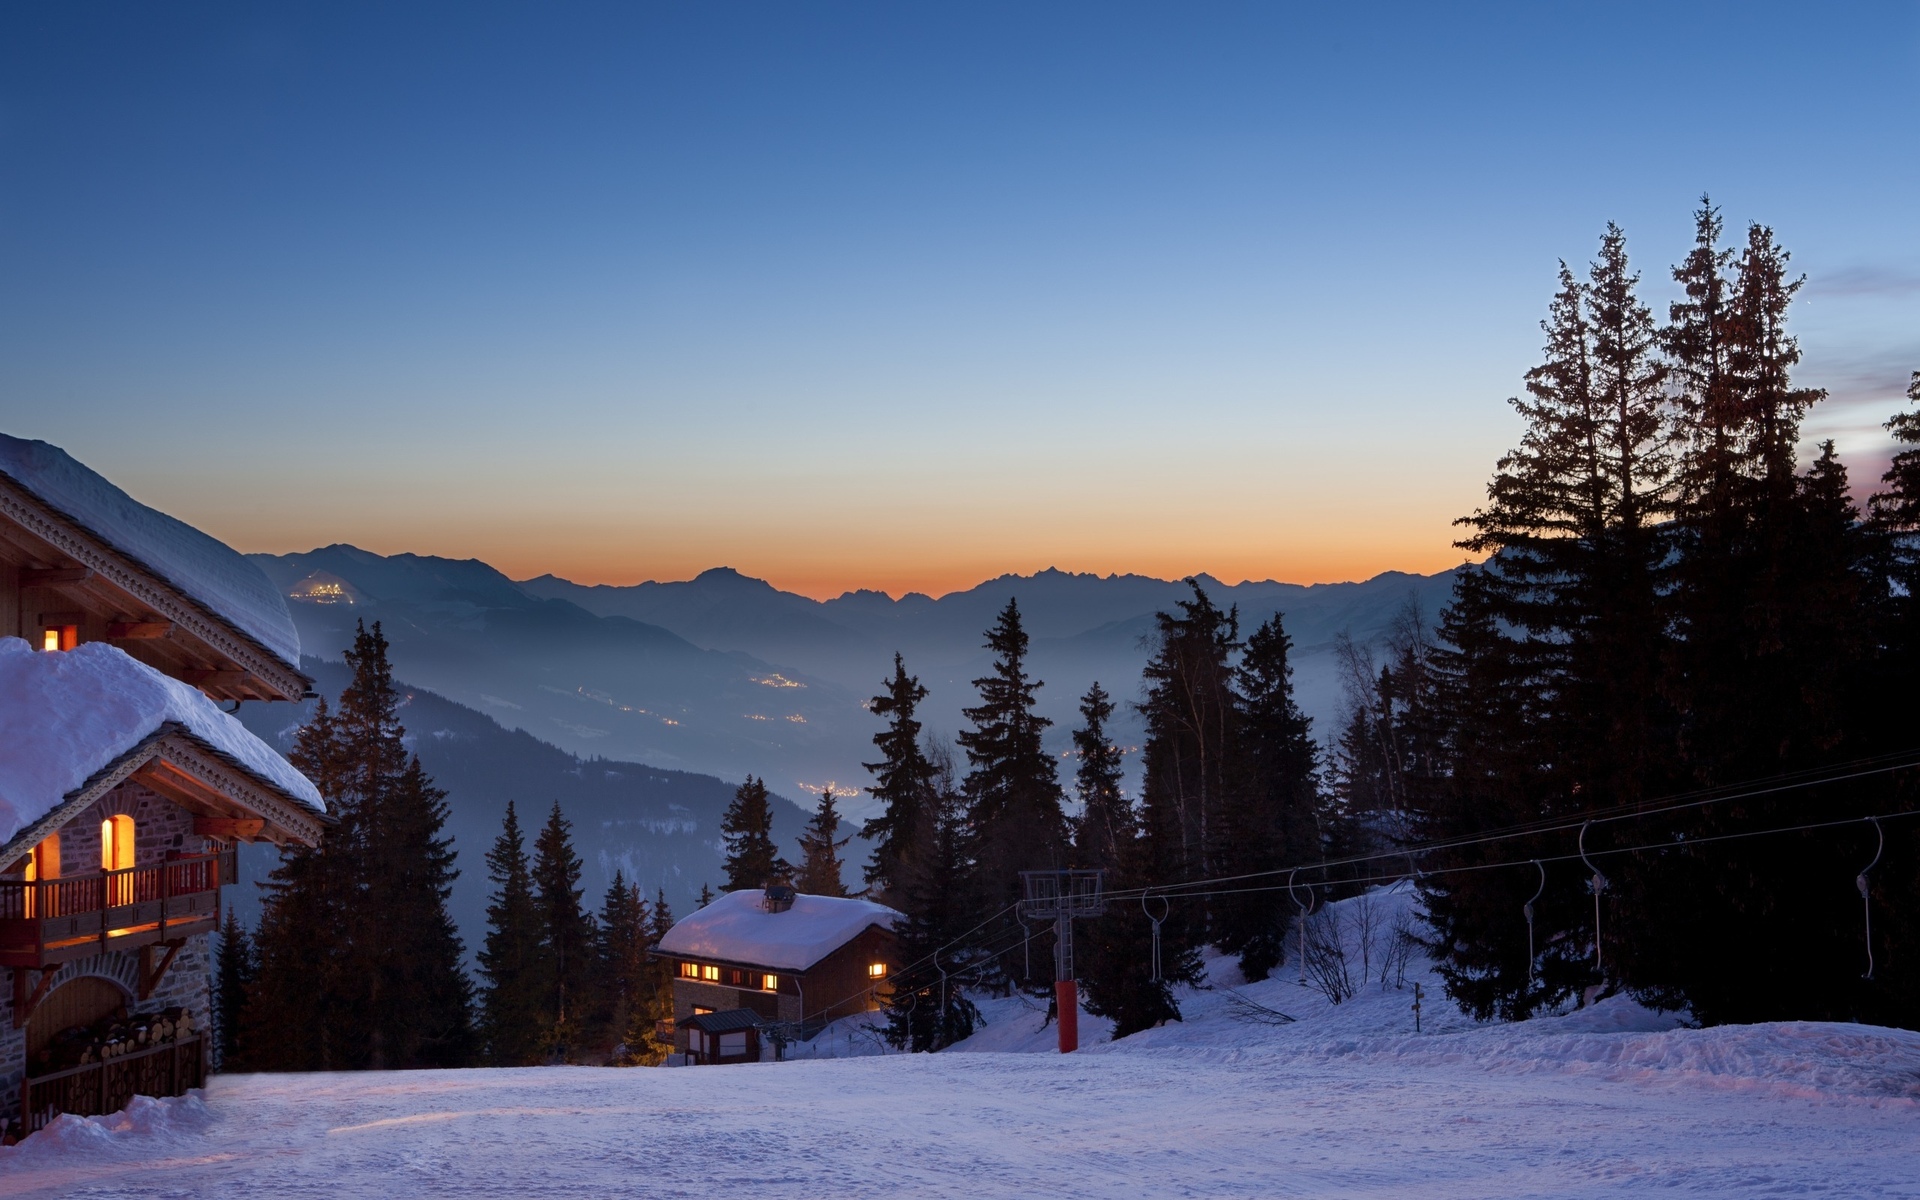 Winter Snow Resort Mountains Trees Sunset Sunrise Sky Buildings Cabin